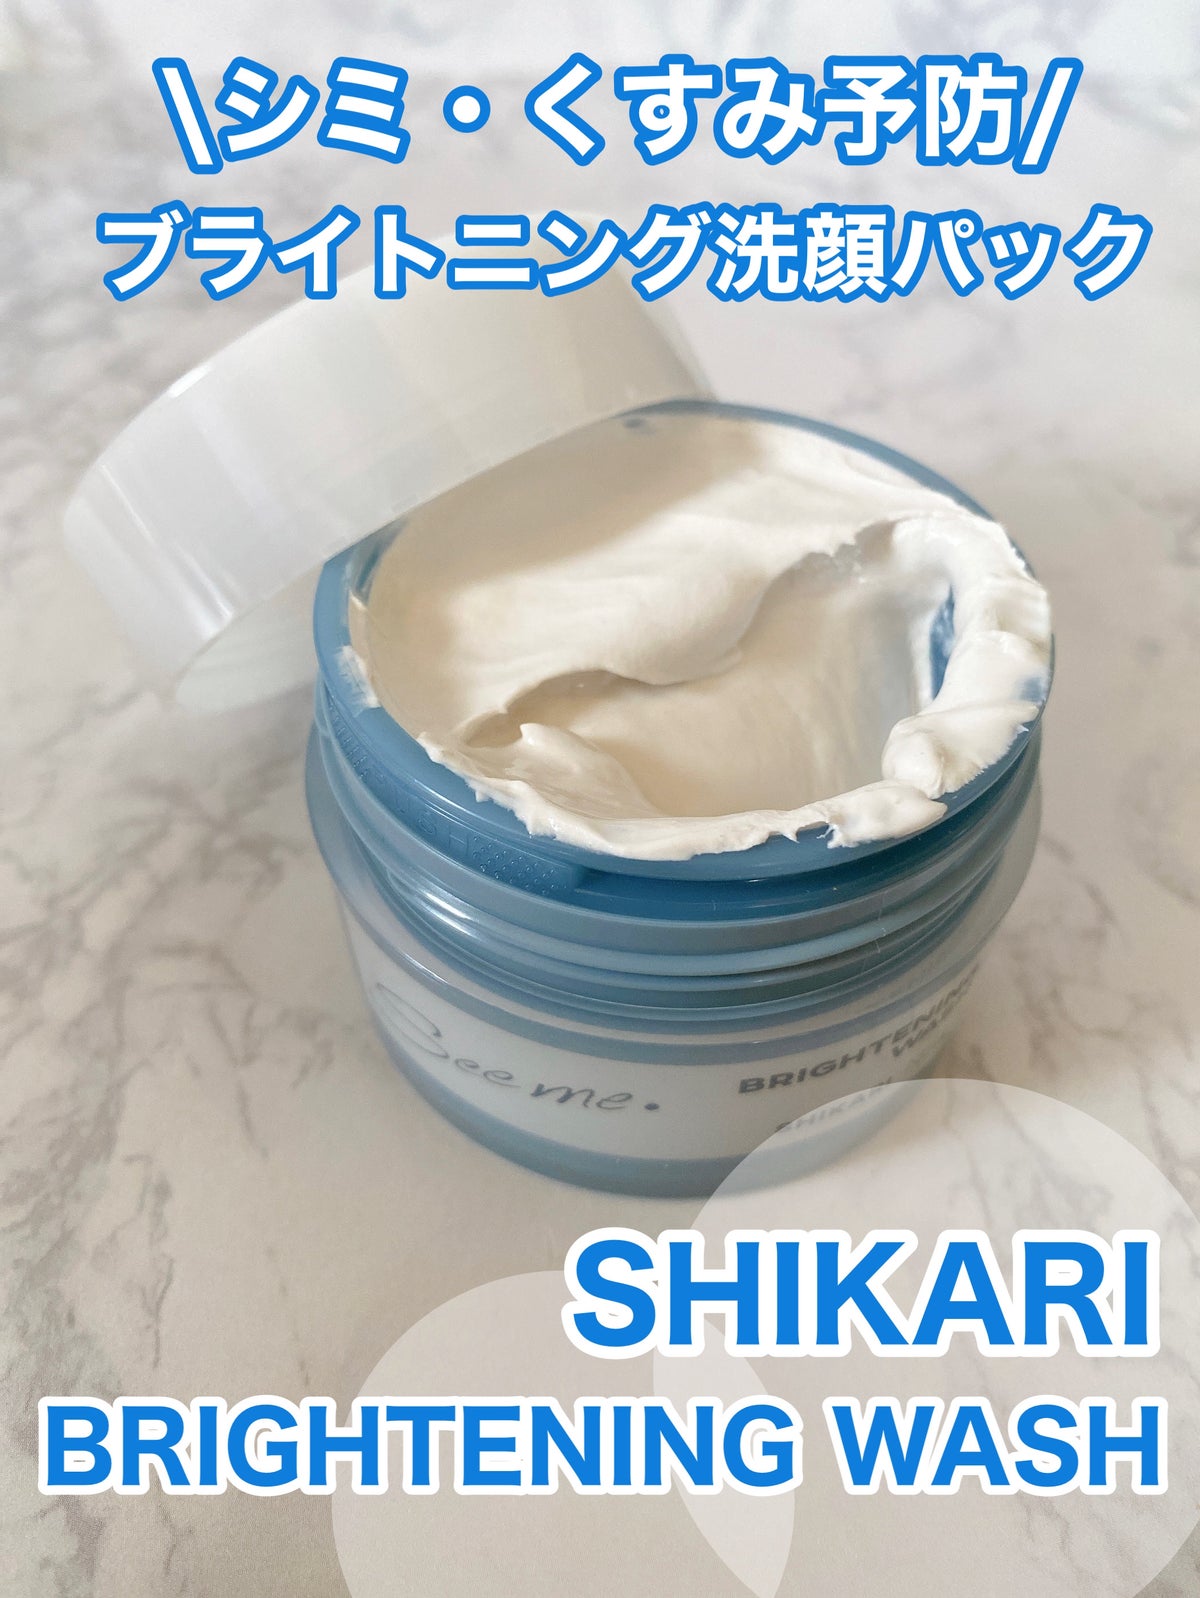 BRIGHTENING WASH 本体 60g / SHIKARI(シカリ) | LIPS